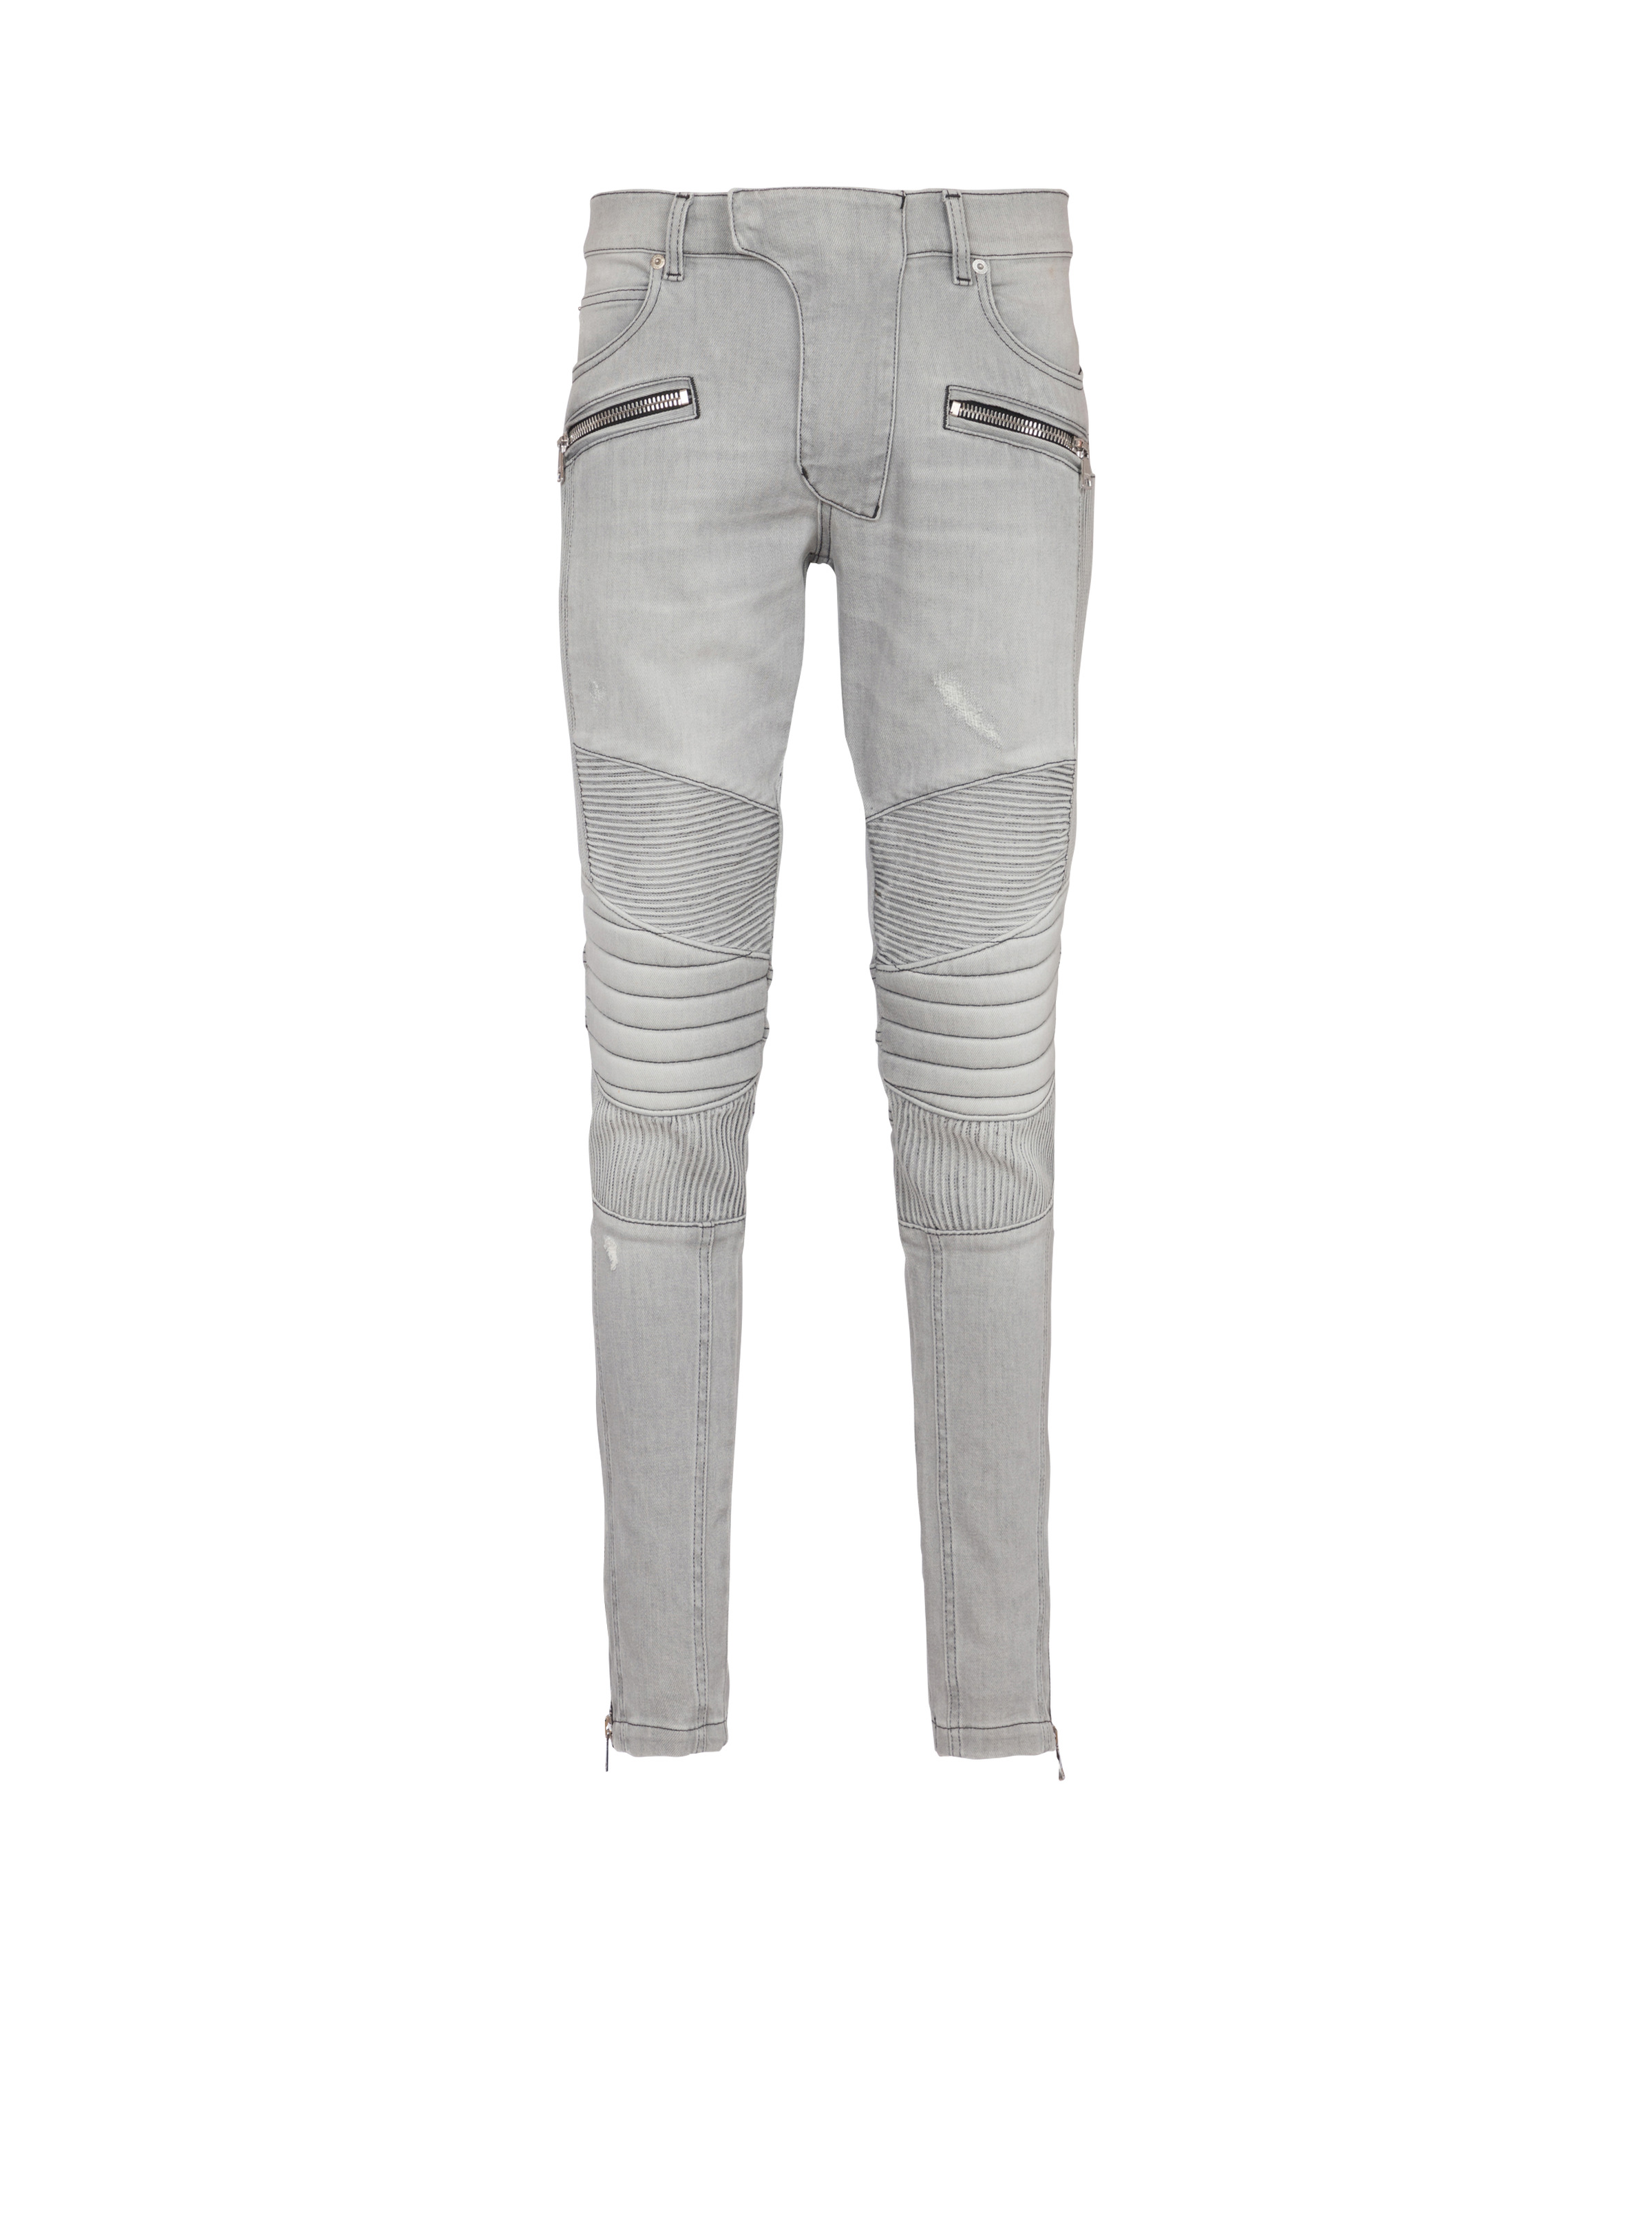 Biker jeans in Grey quilted denim - 1